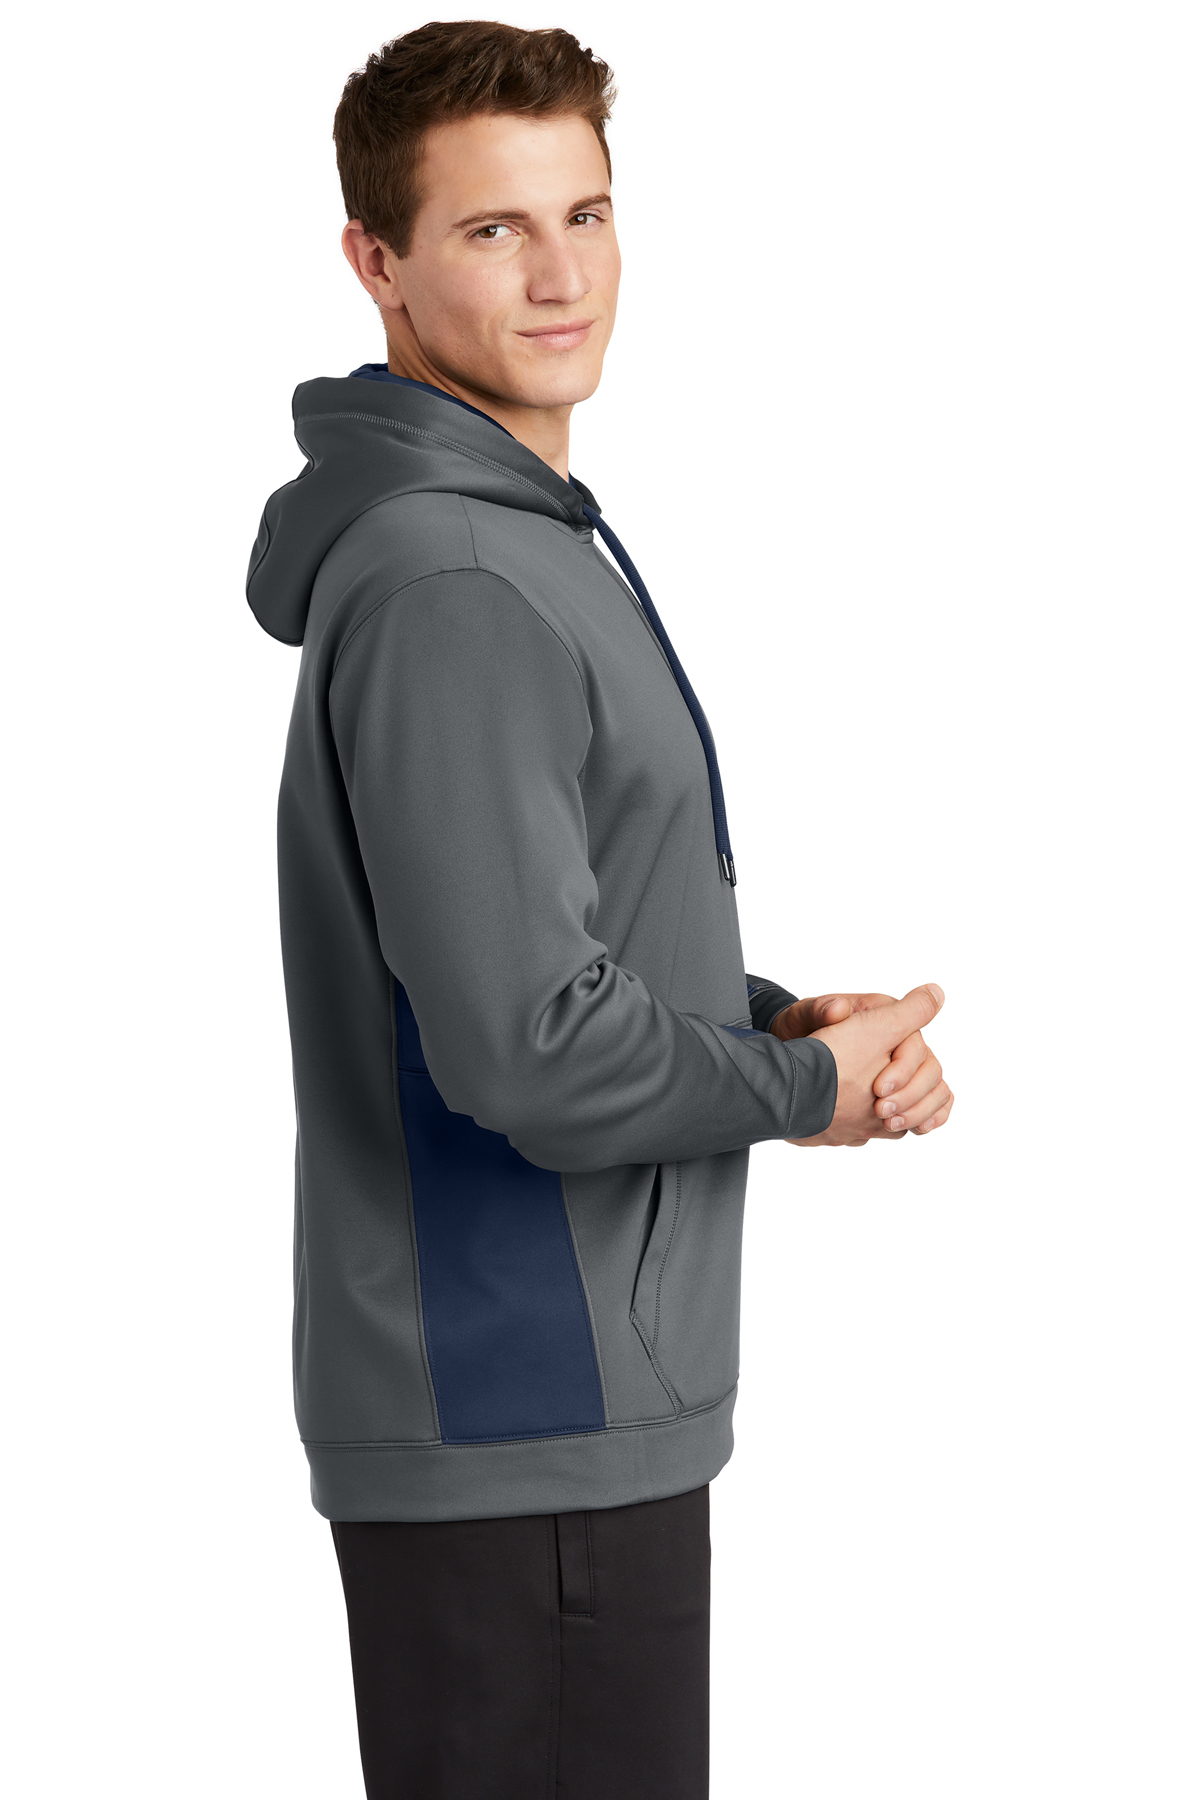 Sport-Tek Sport-Wick Fleece Colorblock Hooded Pullover | Product | SanMar